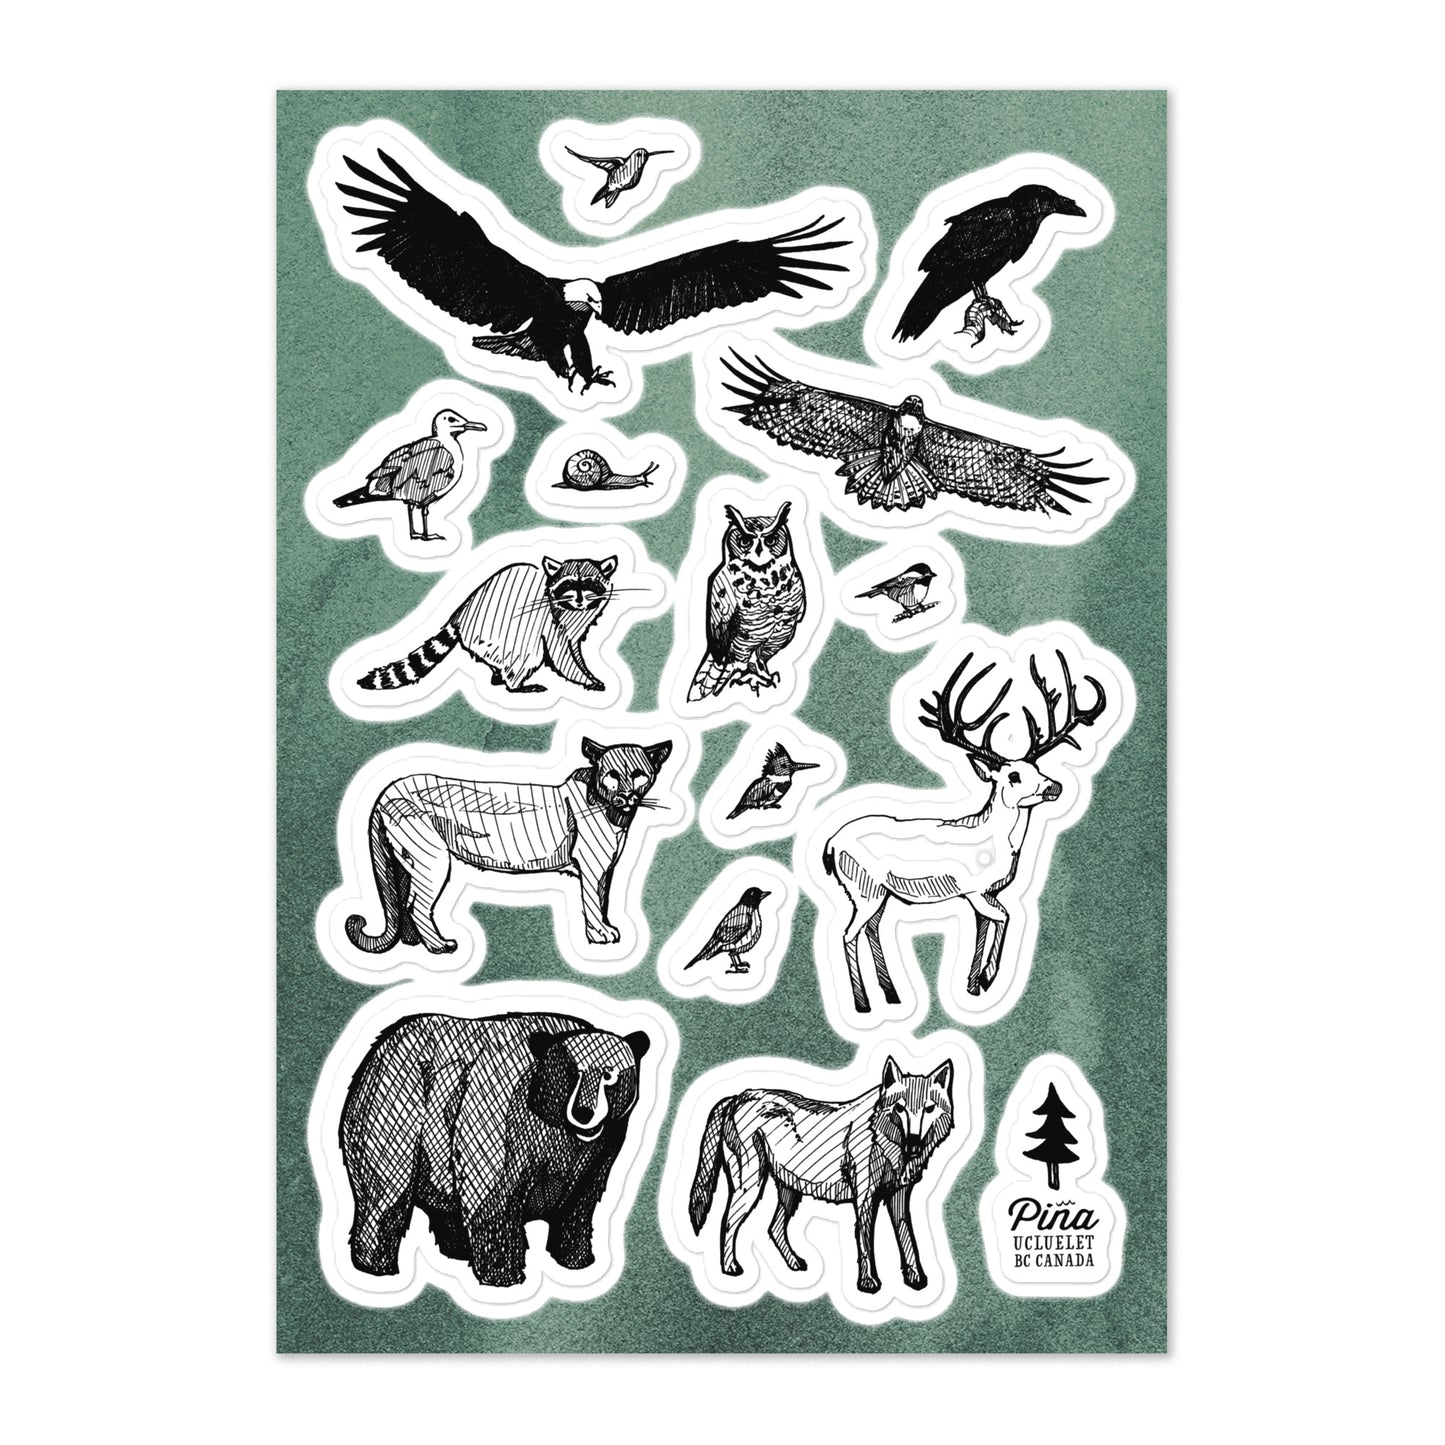 Species of Ucluelet Forest Animals Sticker Sheet